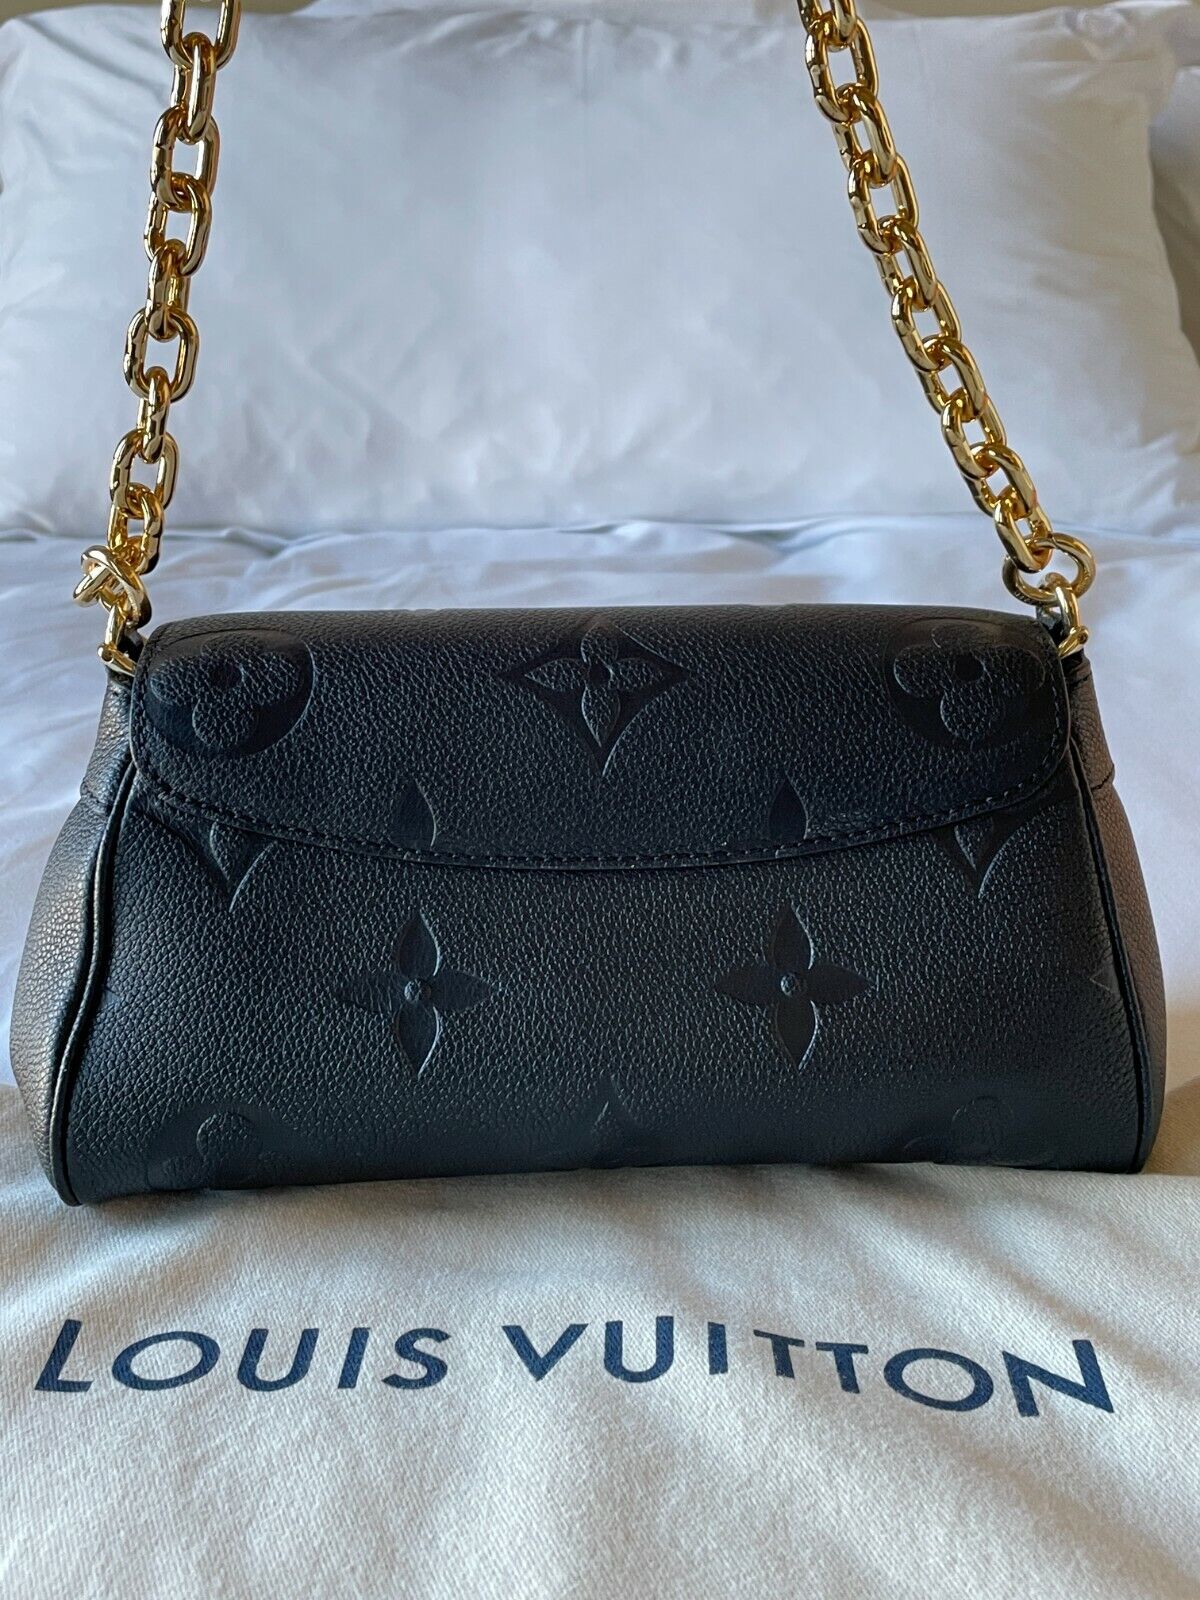 Louis Vuitton Favorite Shoulder Bag Black Leather for sale online 